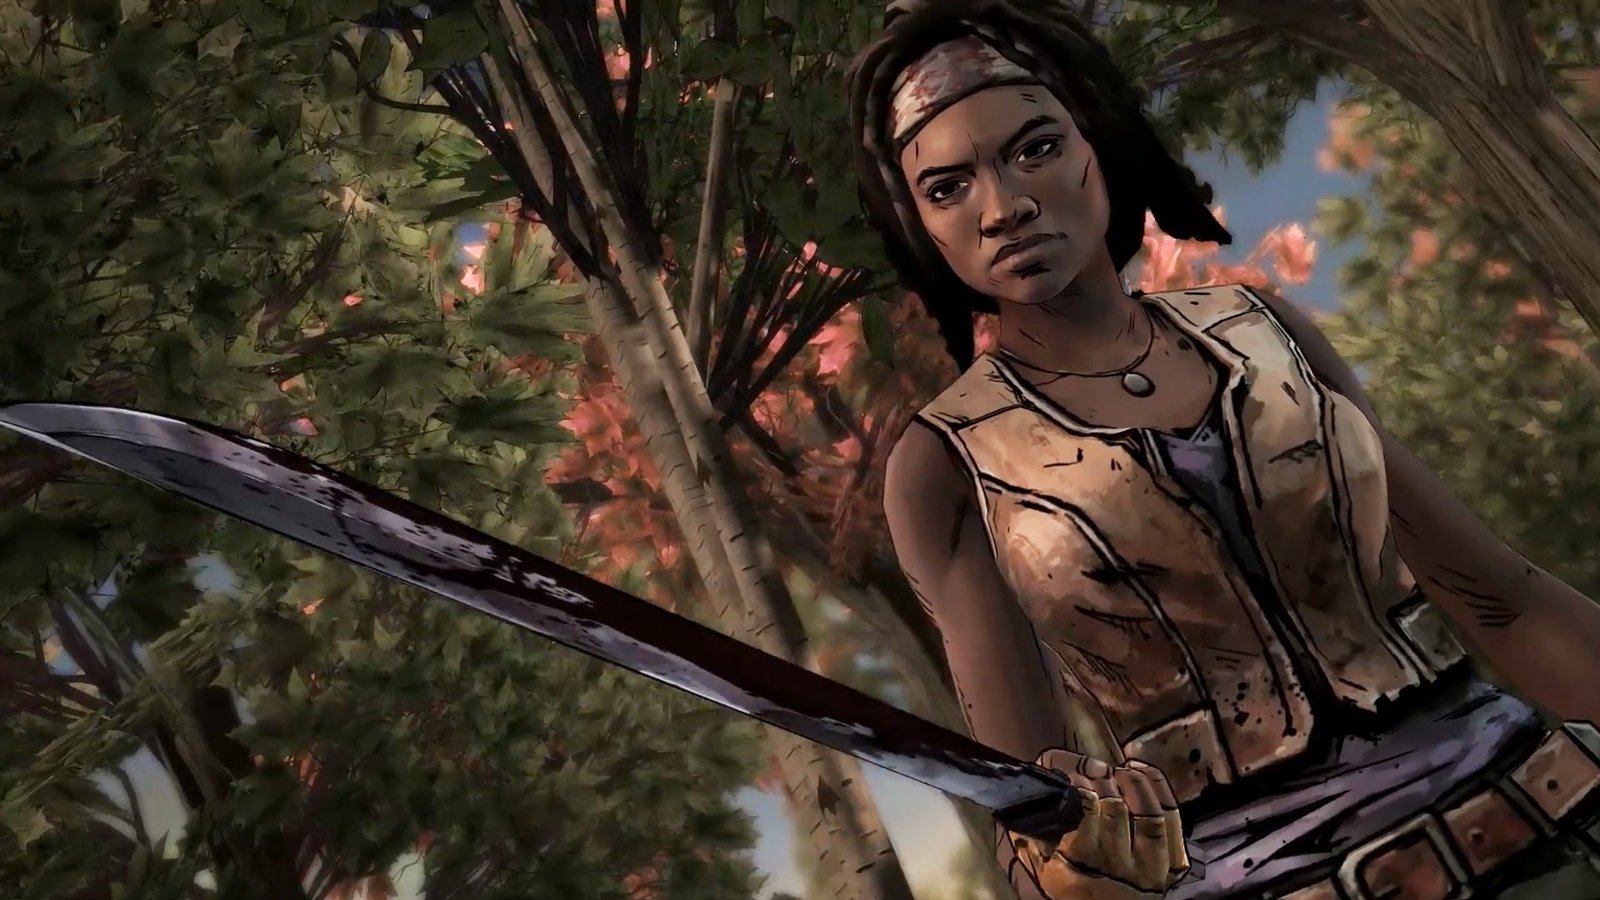 The Walking Dead: Michonne - A Telltale Miniseries